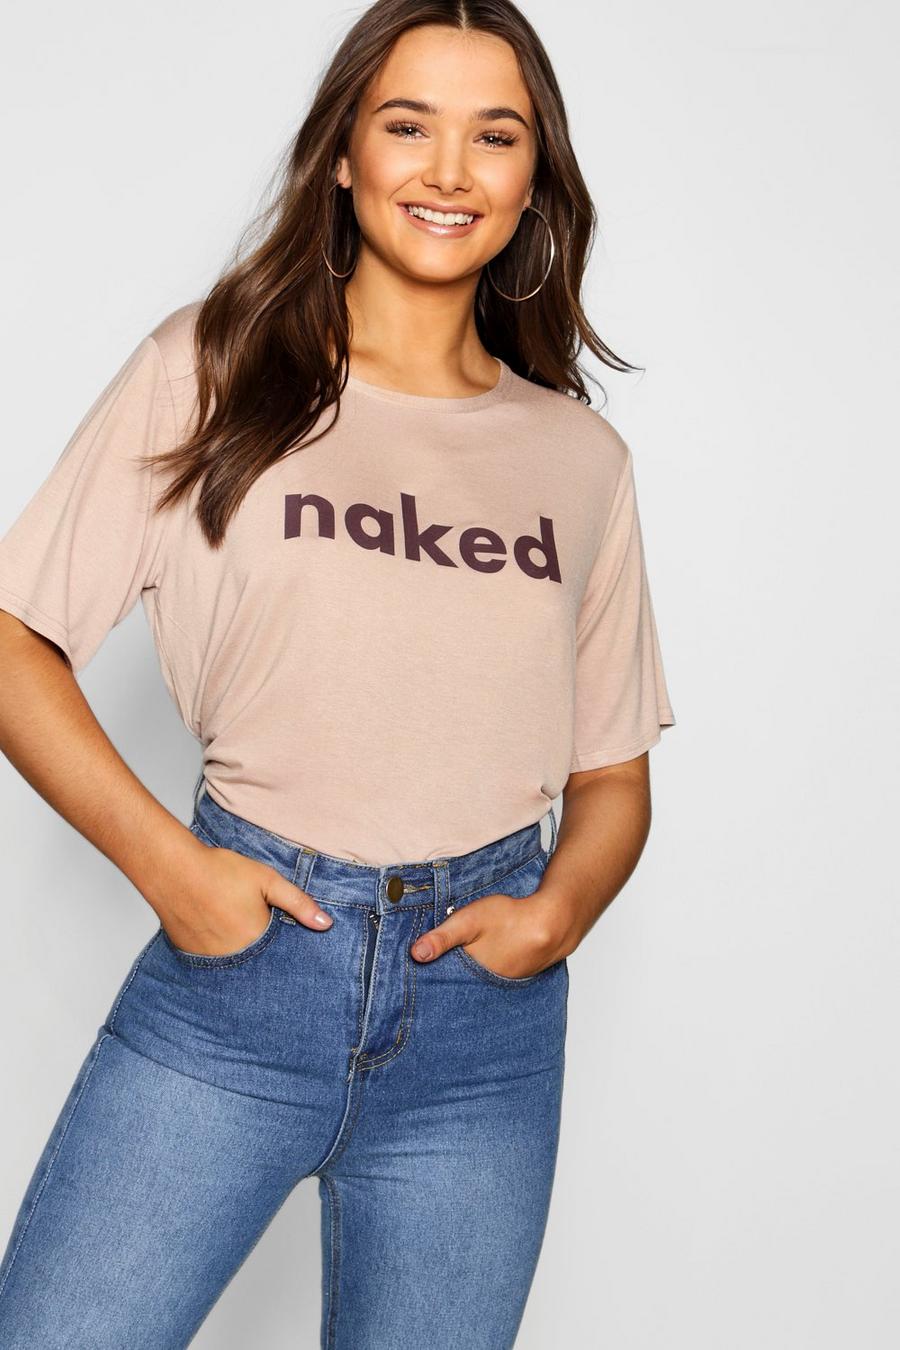 Naked Slogan T-Shirts image number 1